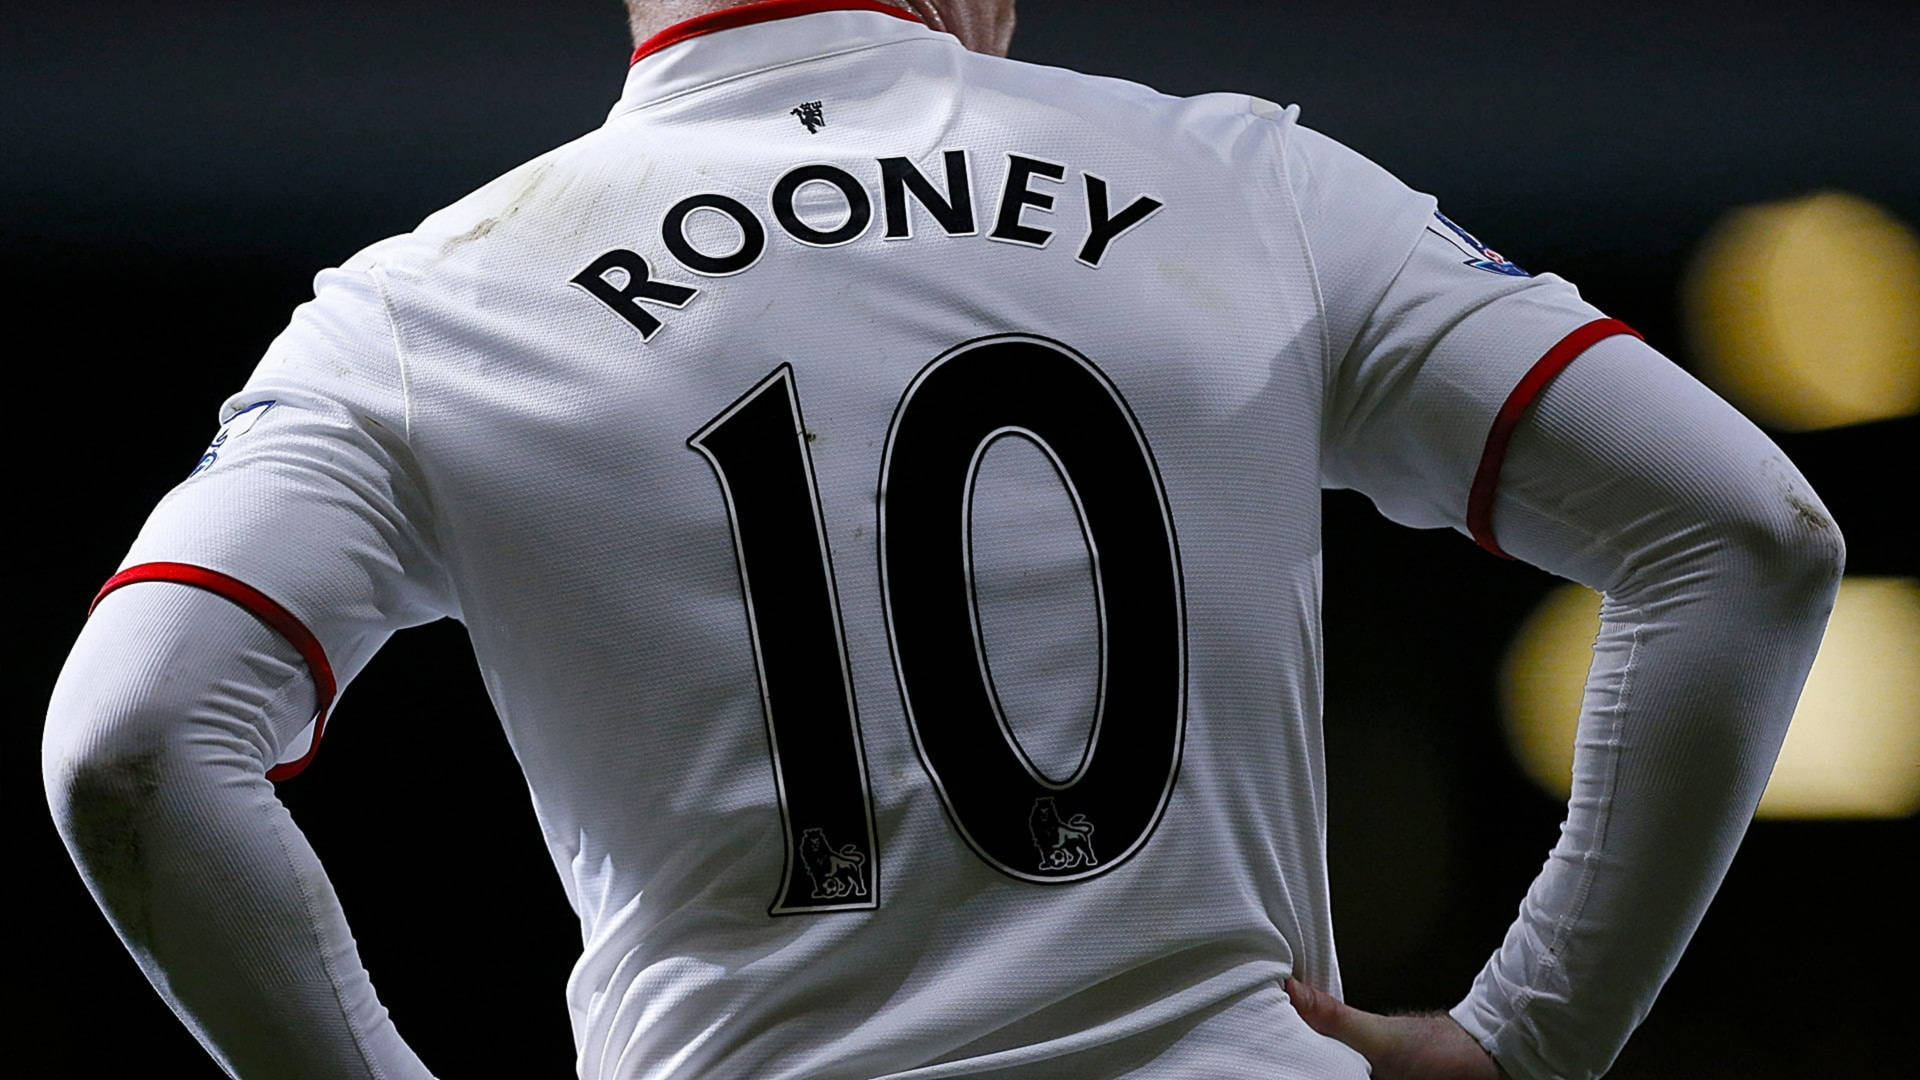 Wayne Rooney Football Jersey Background